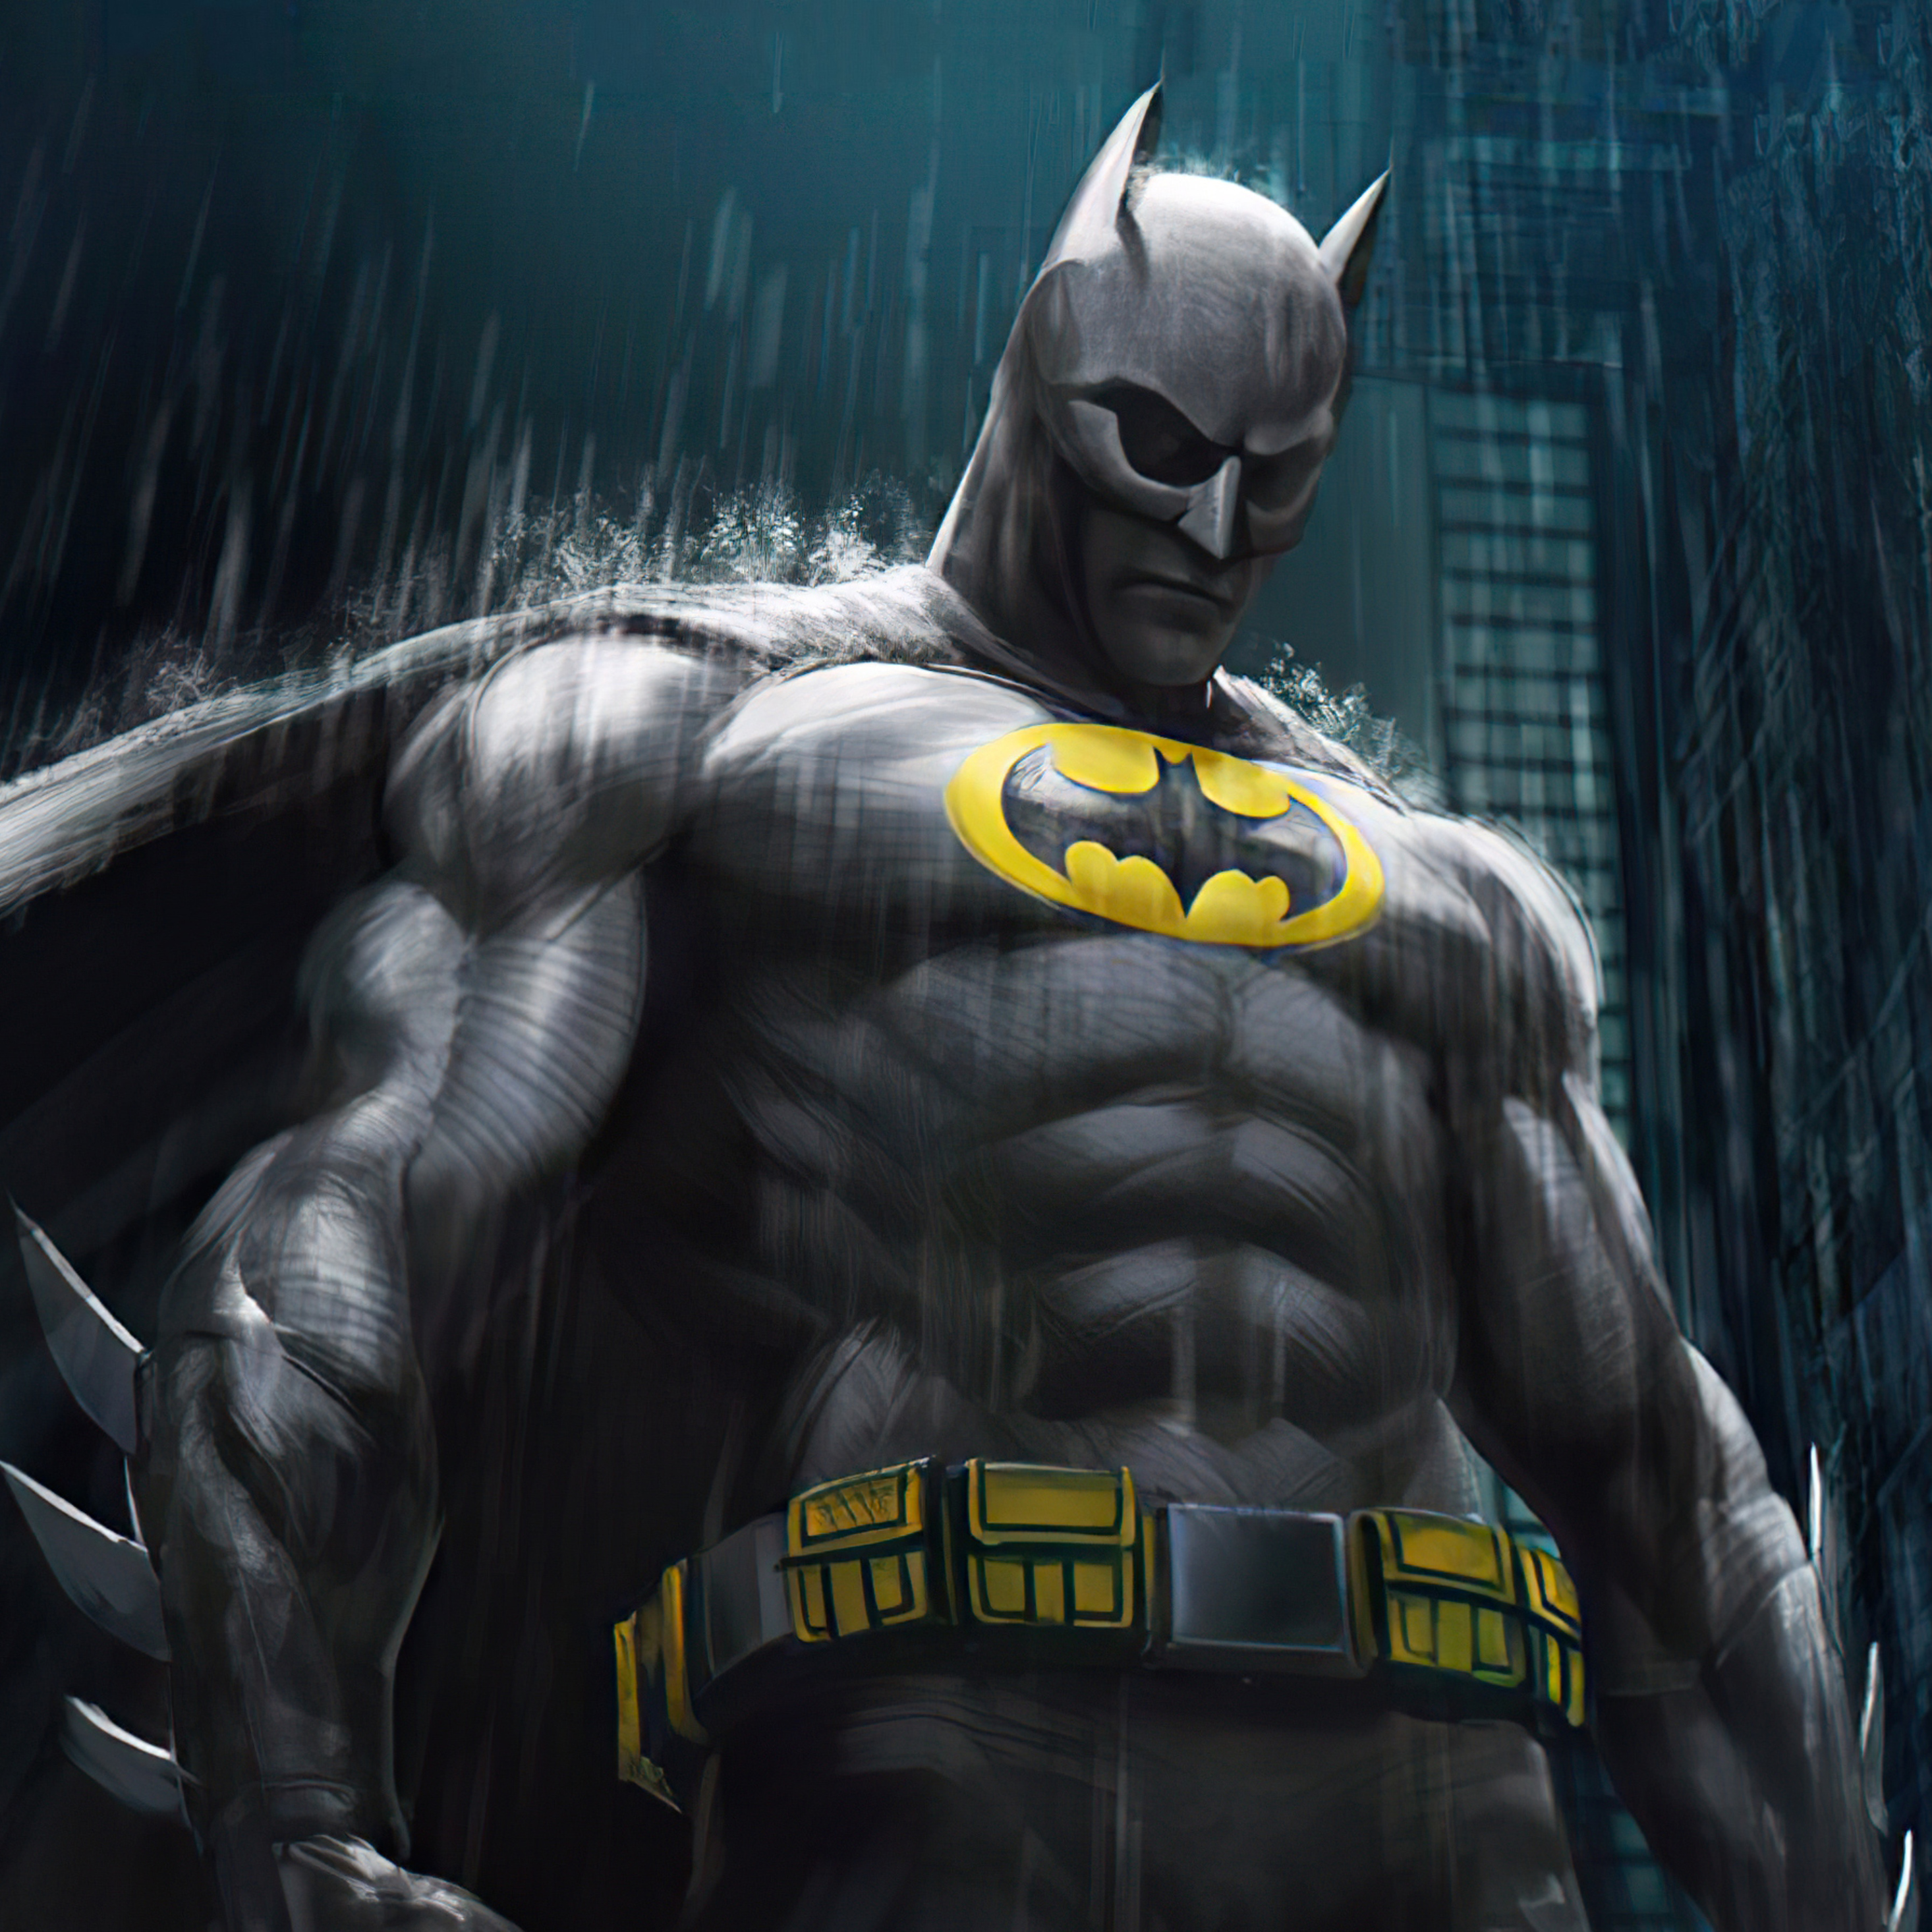 Batman The Detective 4k iPad Pro Retina Display HD 4k Wallpaper, Image, Background, Photo and Picture